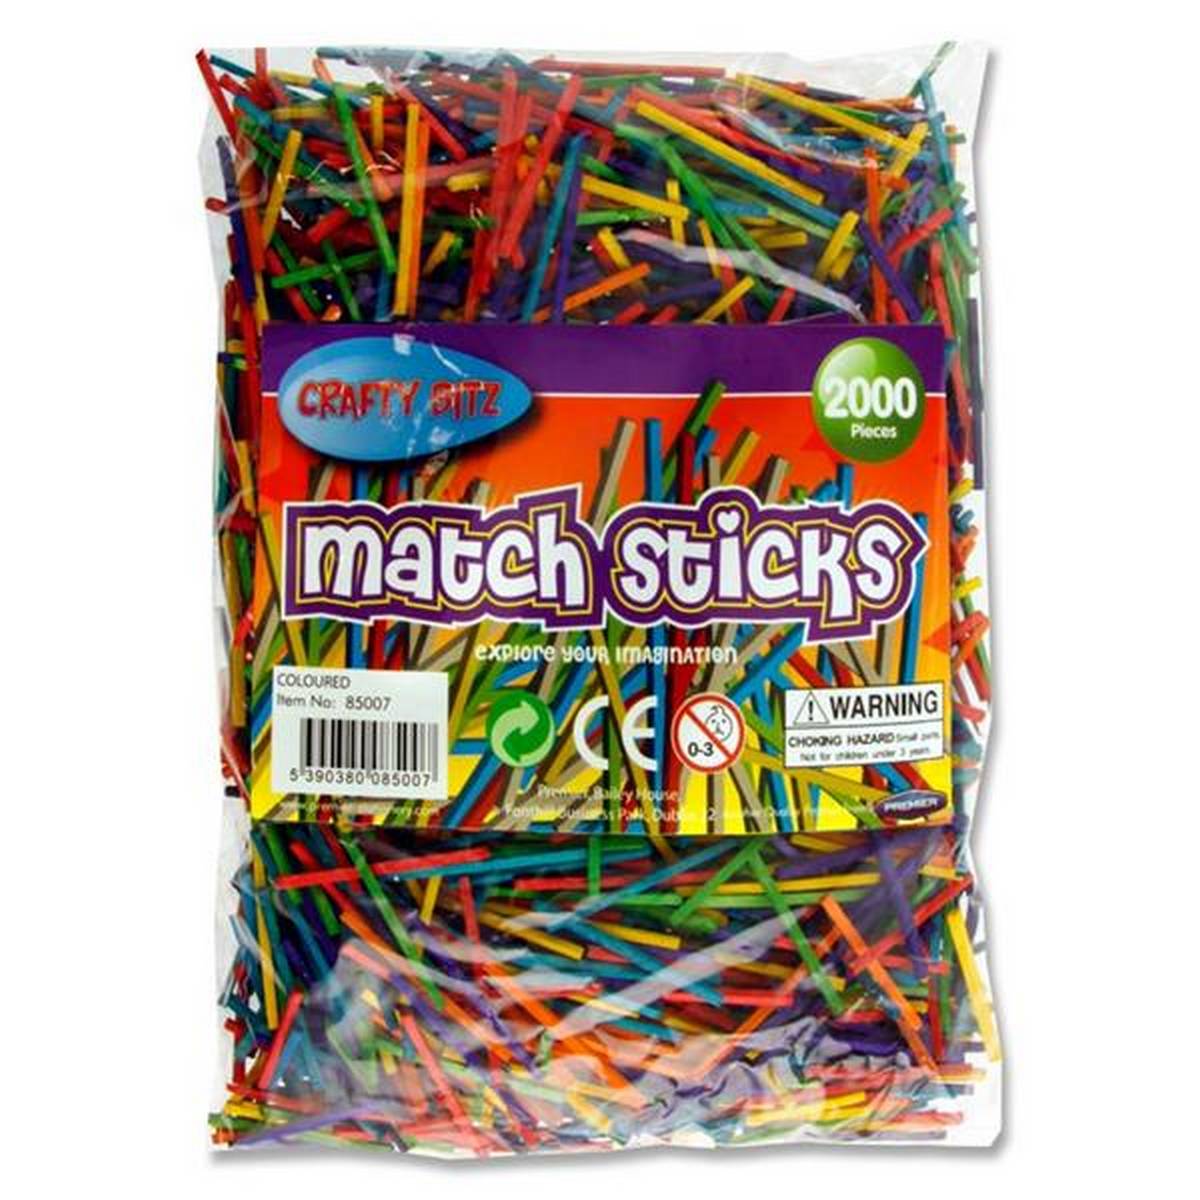 2000 Match sticks Coloured 